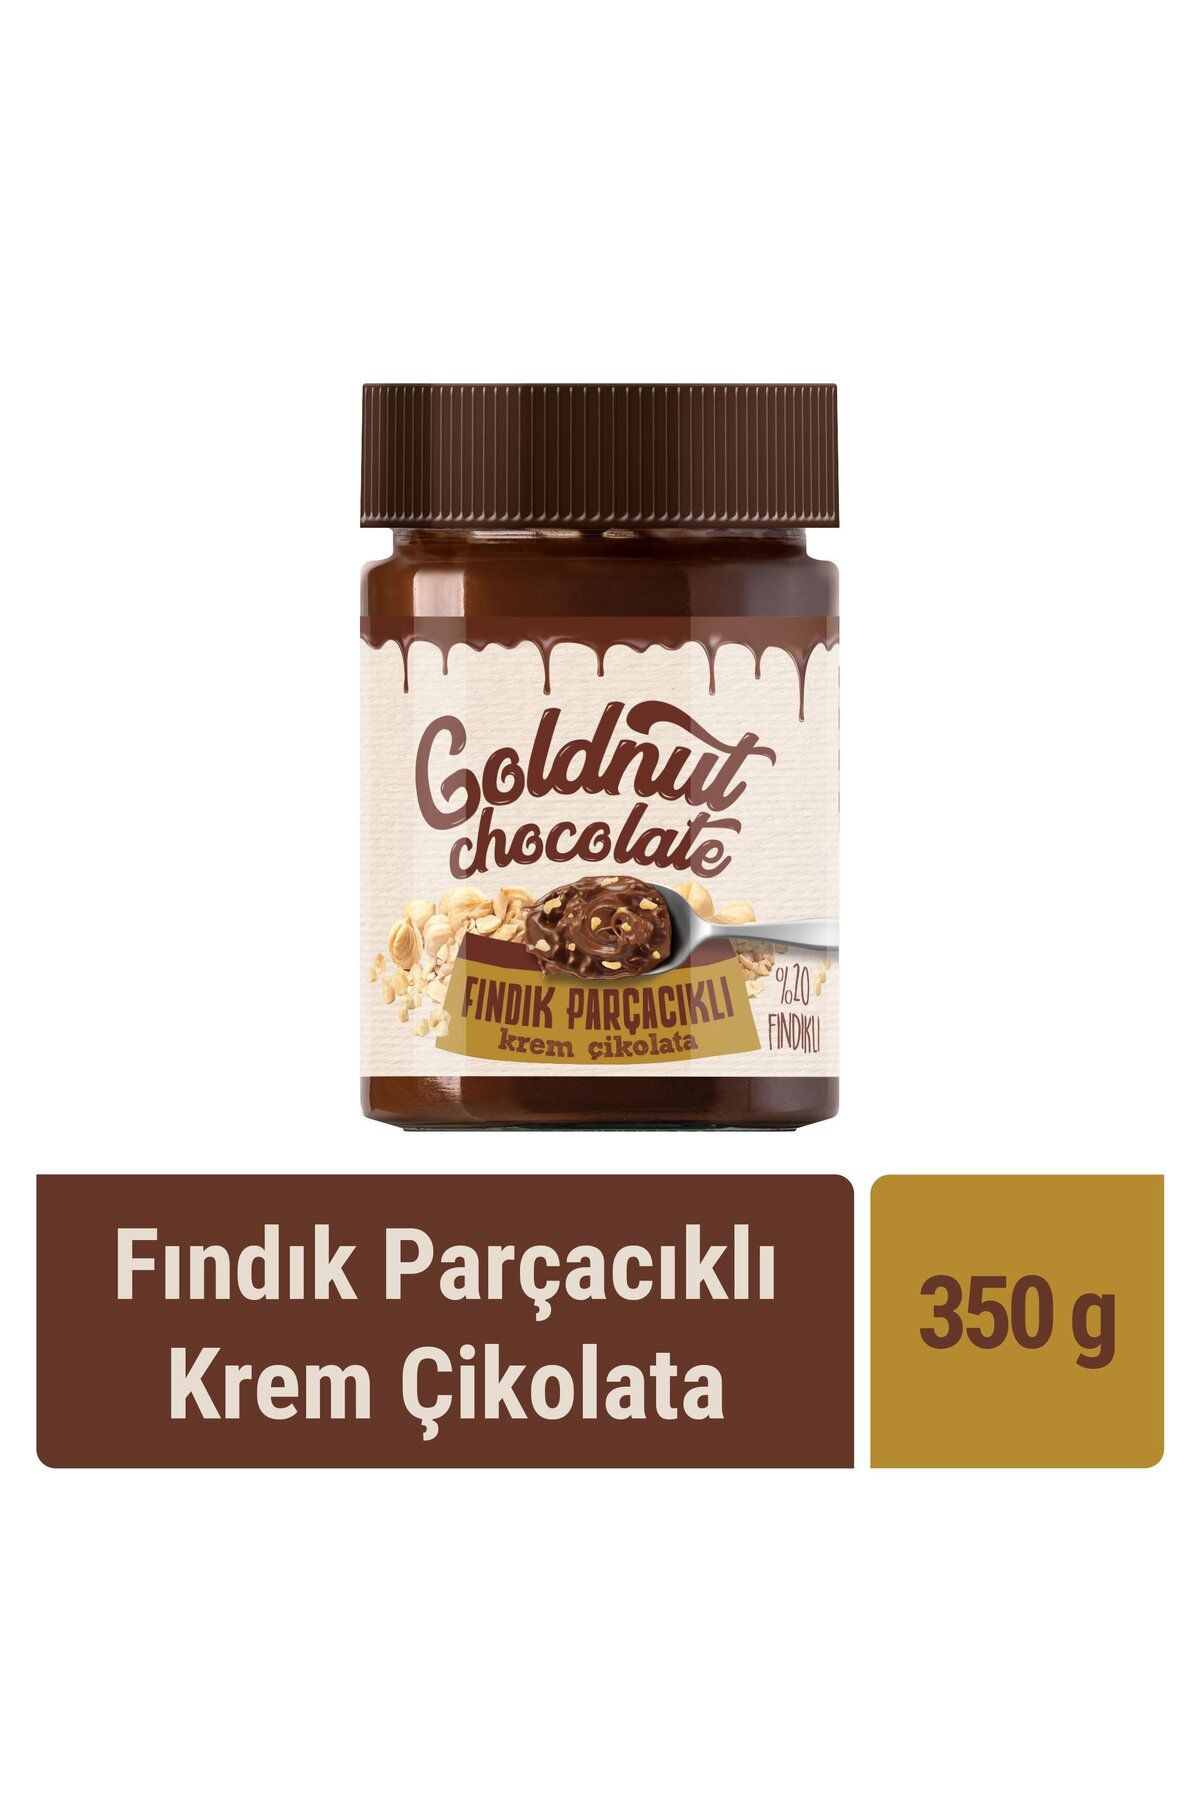 Goldnut Fındık Parçacıklı Krem Çikolata 350 gr